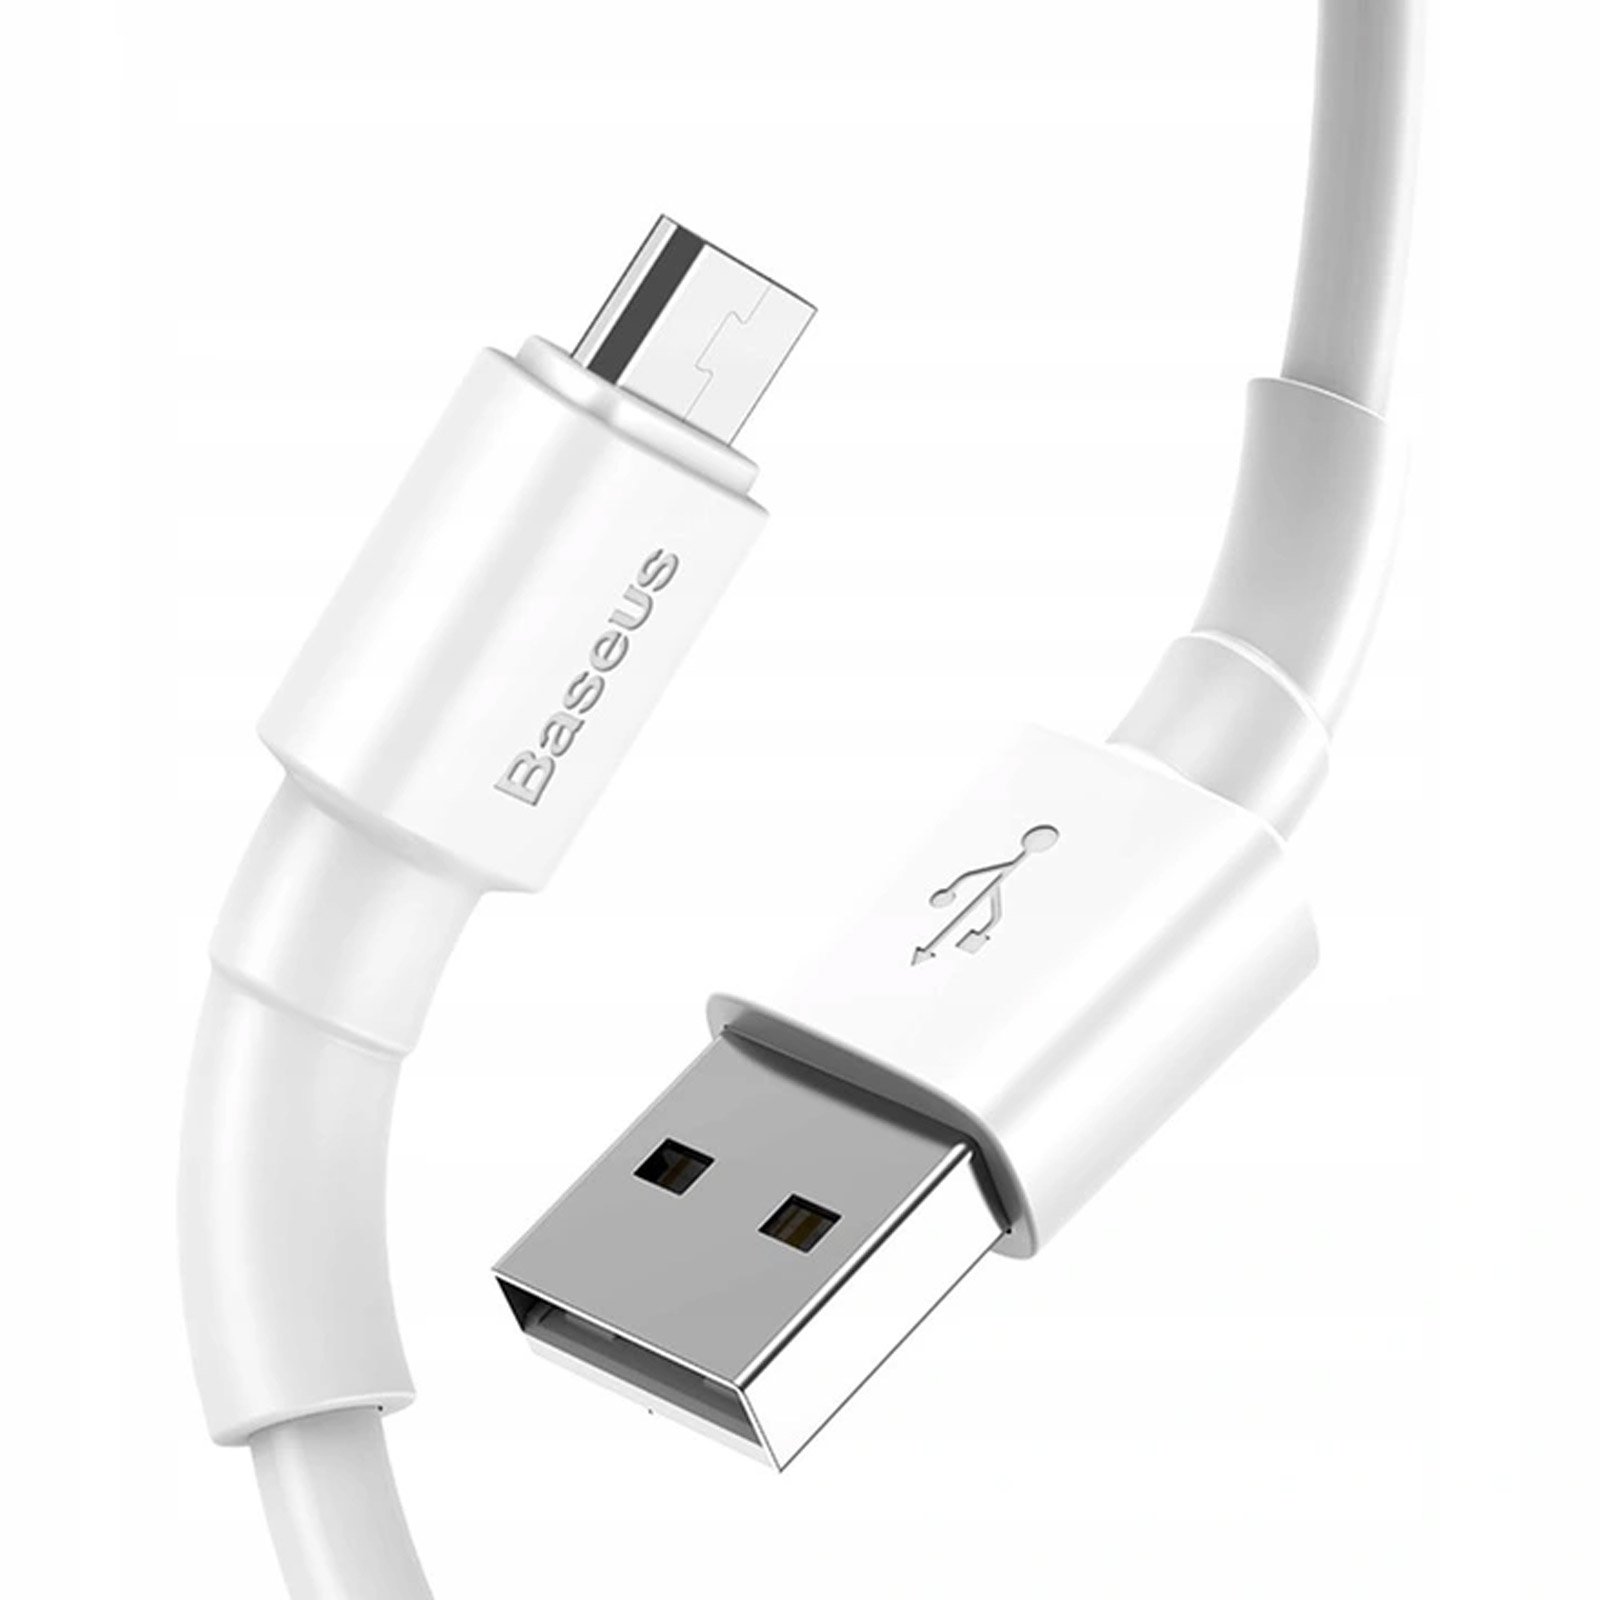 Кабель BASEUS Mini White Micro USB, 2.4A, длина 1 метр, цвет белый